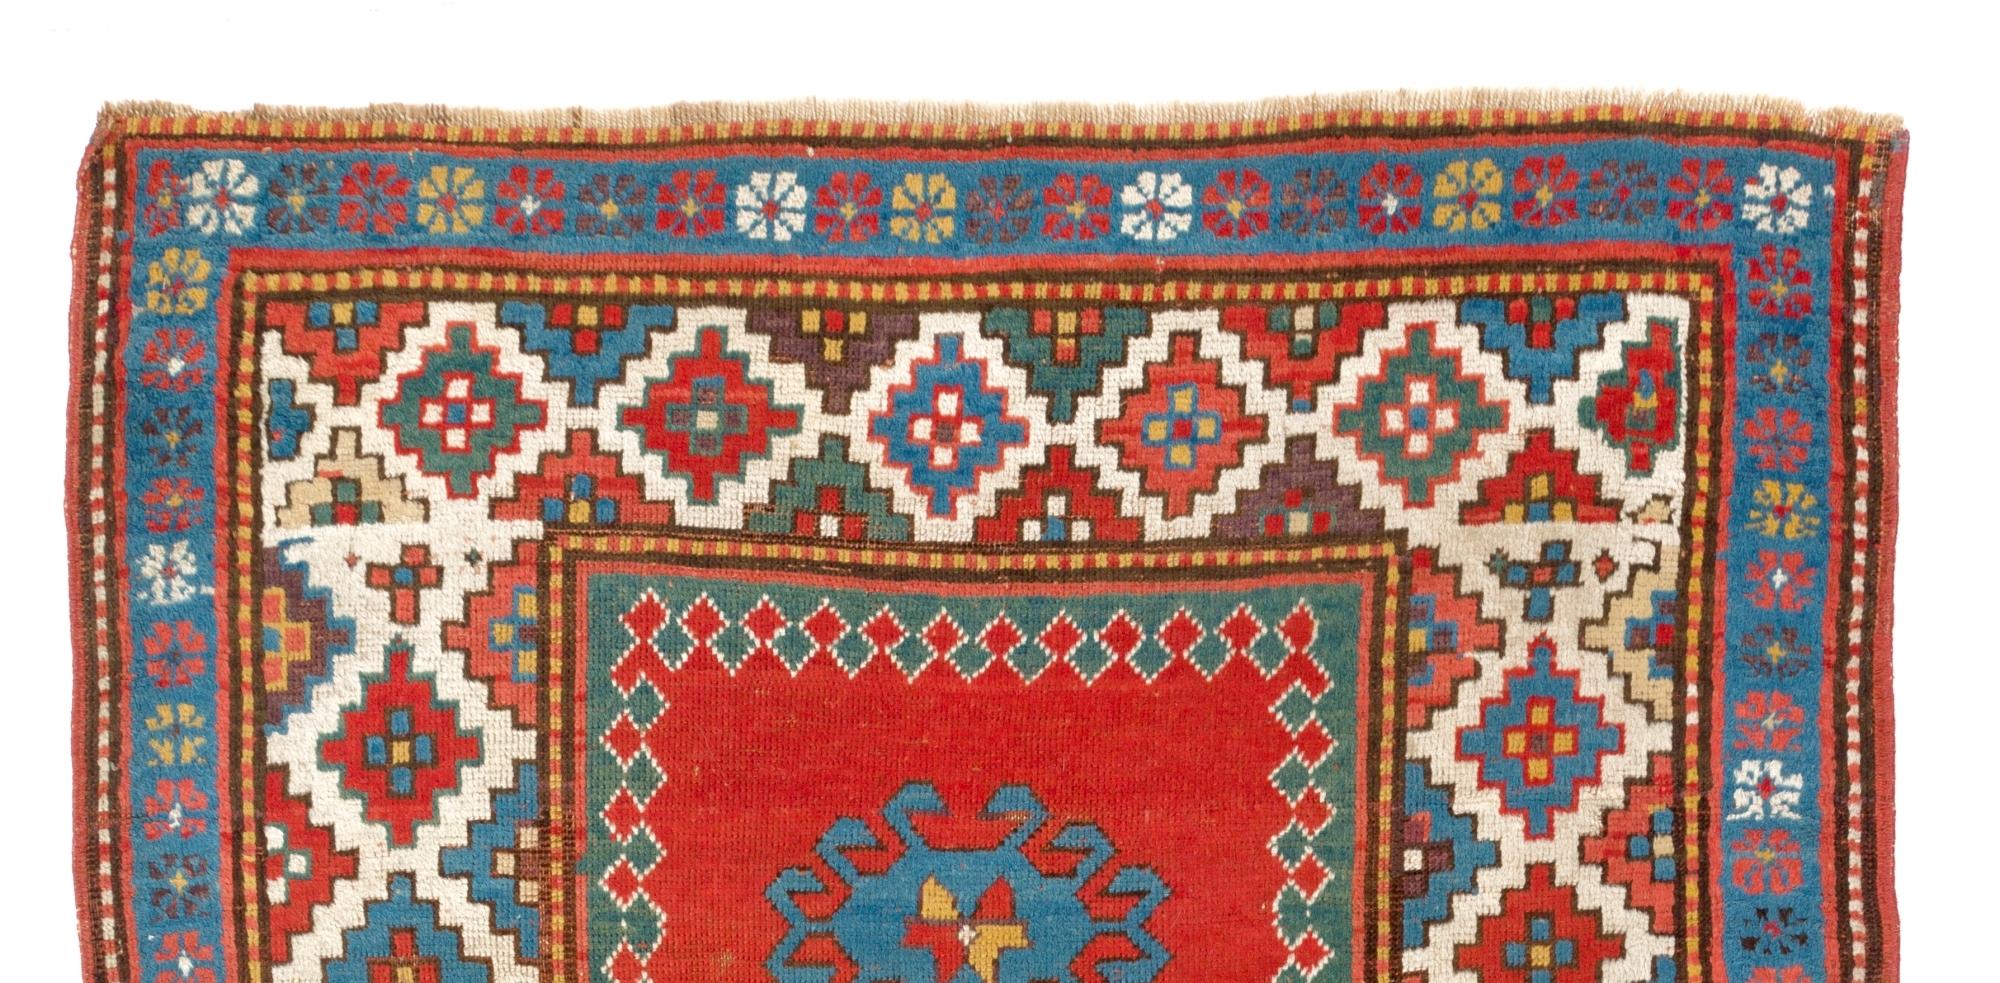 Antique Caucasian Bordjalou Kazak rug, circa 1880. Measures: 4 x 5.8 ft.
Very good condition, all original. 
100% wool, natural dyes.